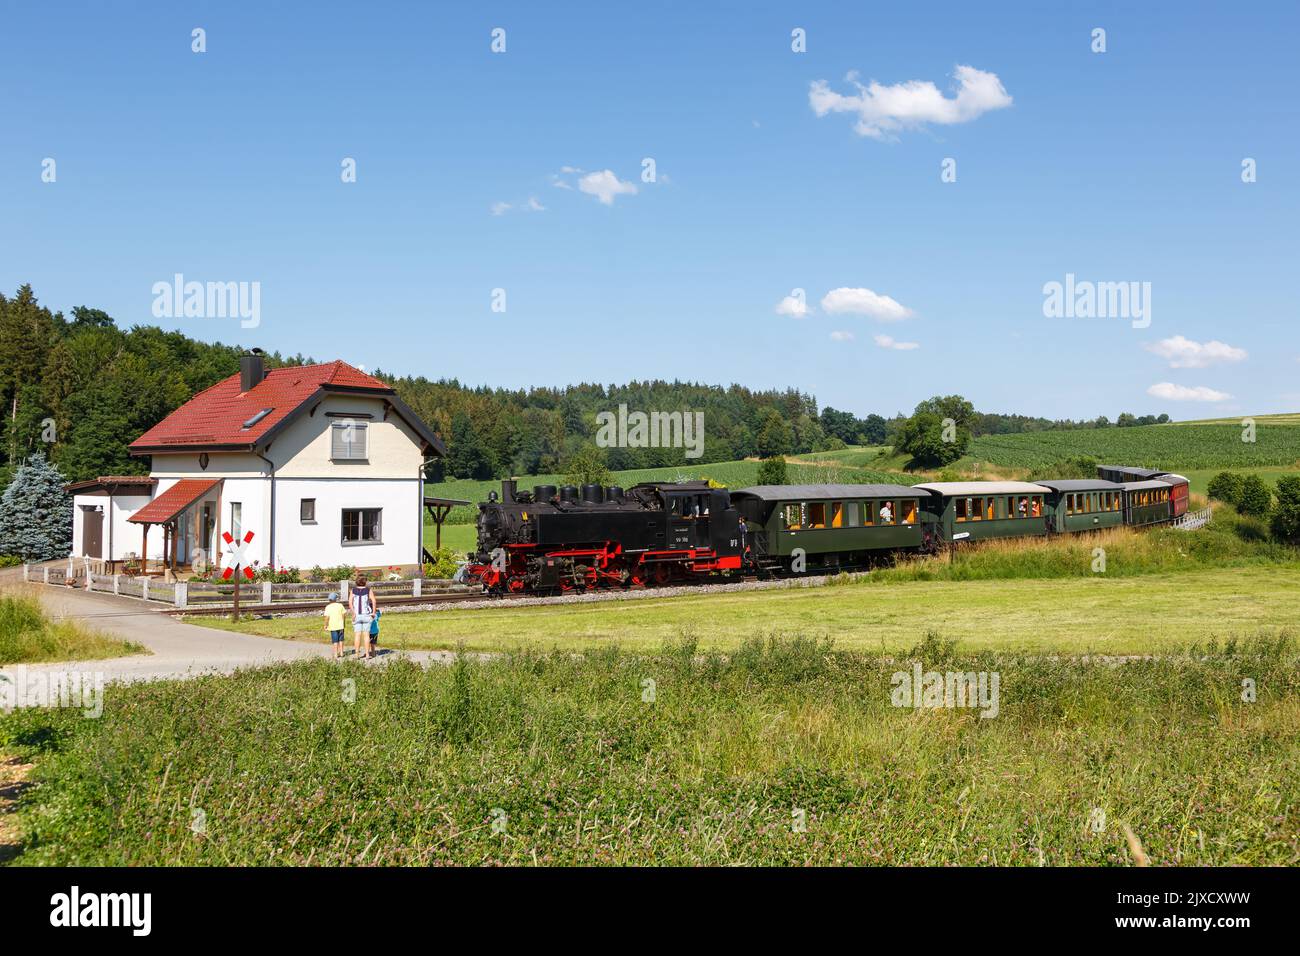 Öchsle steam train locomotive railway rail in Ochsenhausen Wennedach, Germany Stock Photo